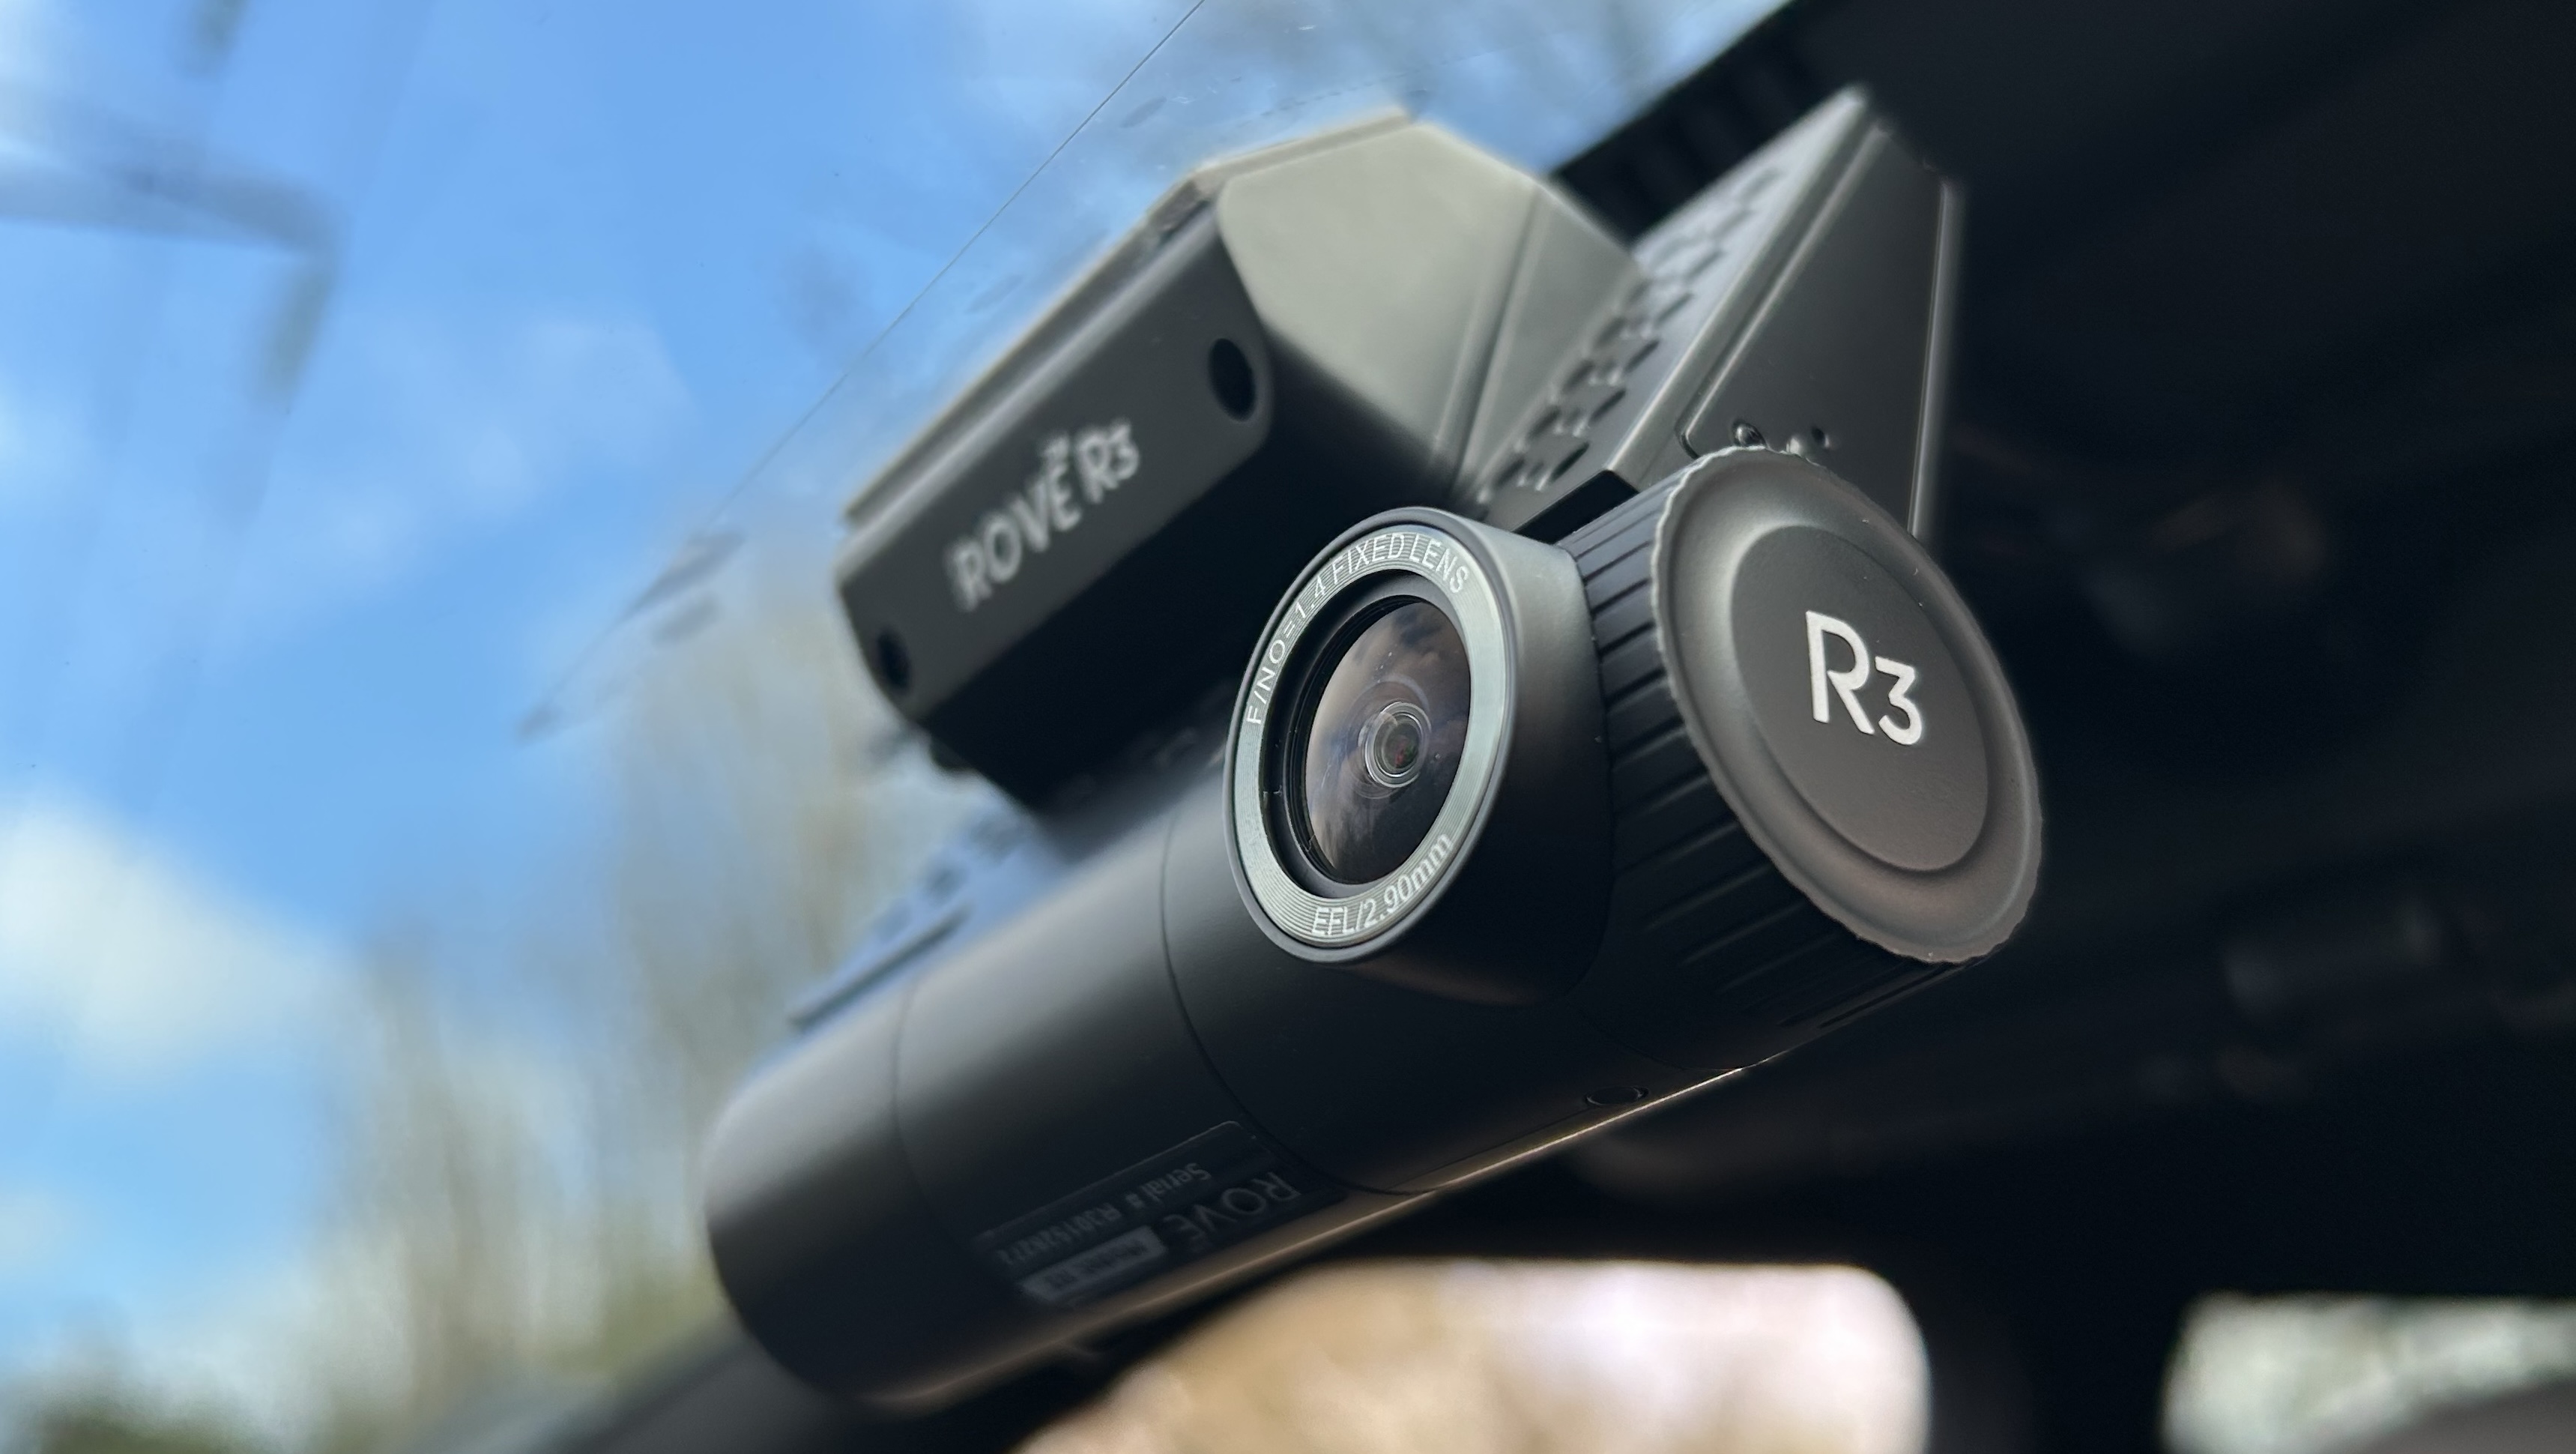 Rove R3 Dash Cam review: ticks all the boxes